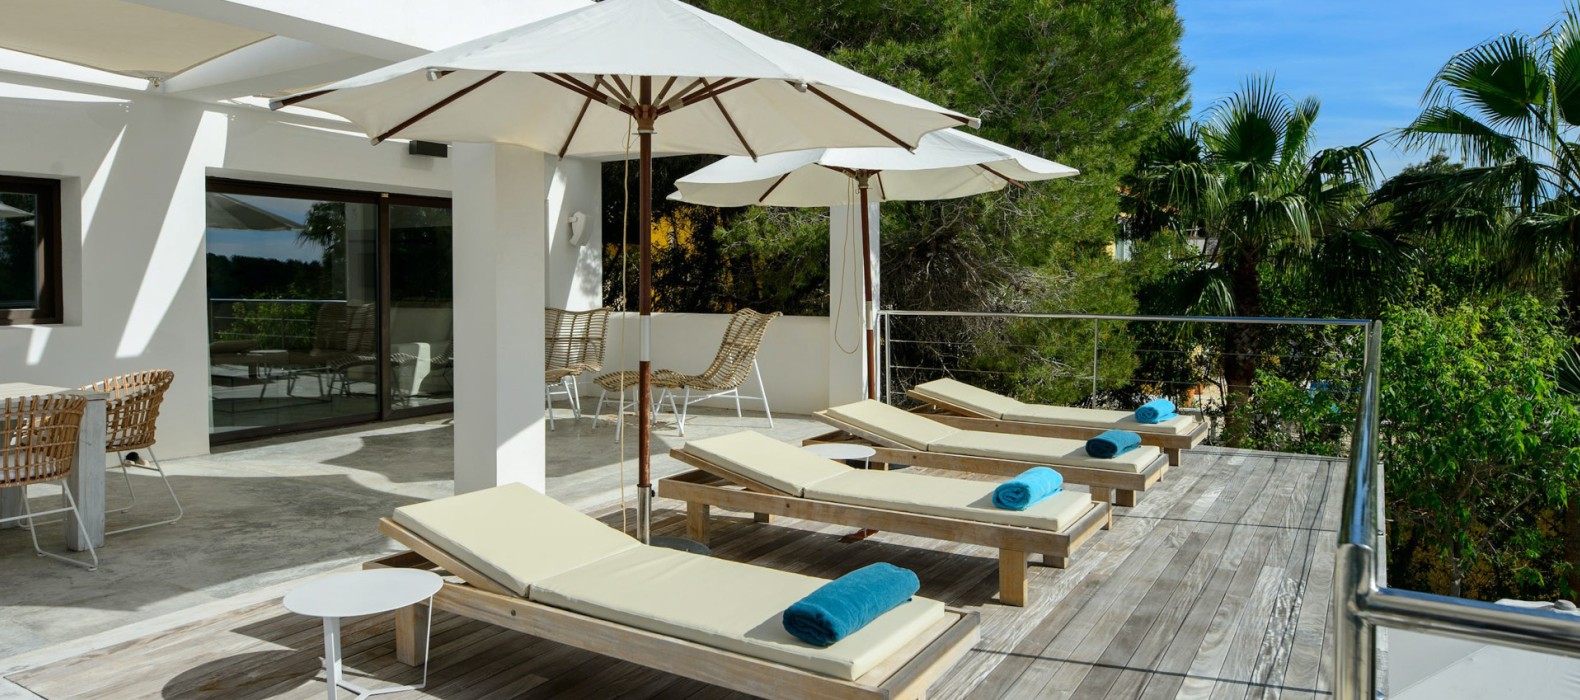 Sun lounger view of Casa Elegance in Ibiza